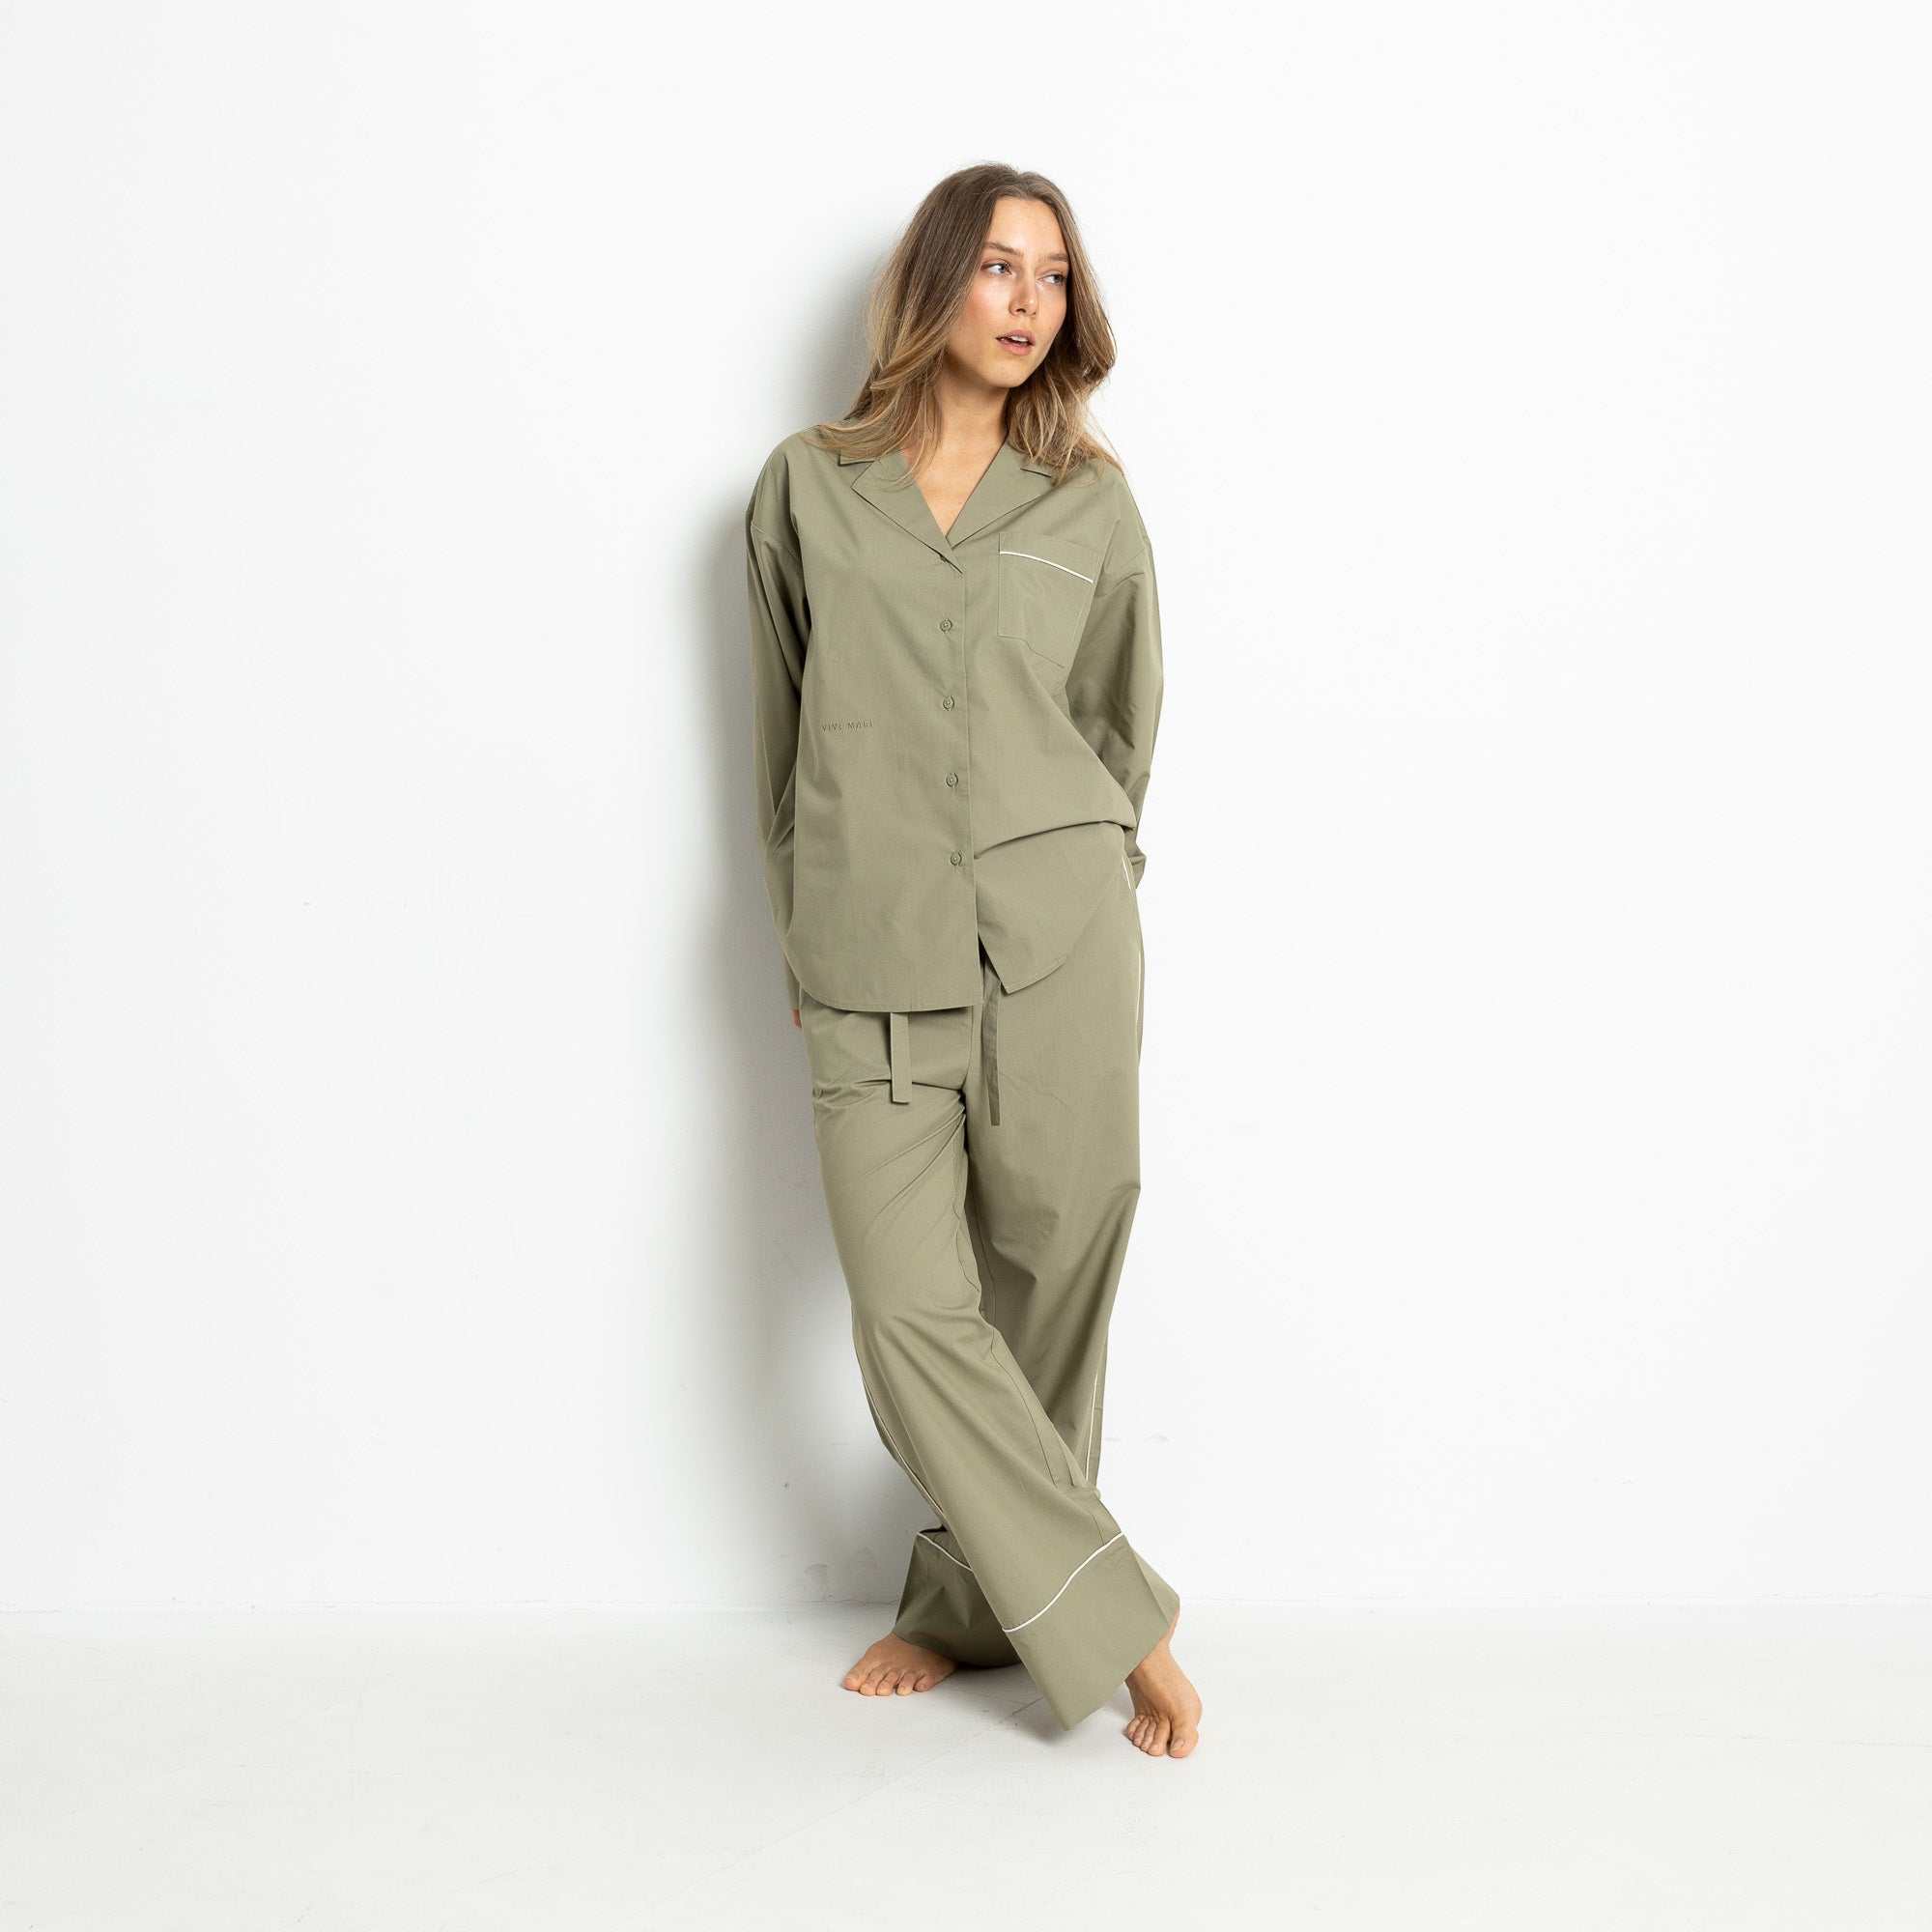 Pyjama Shirt long sleeve - solid pale olive - VIVI MARI